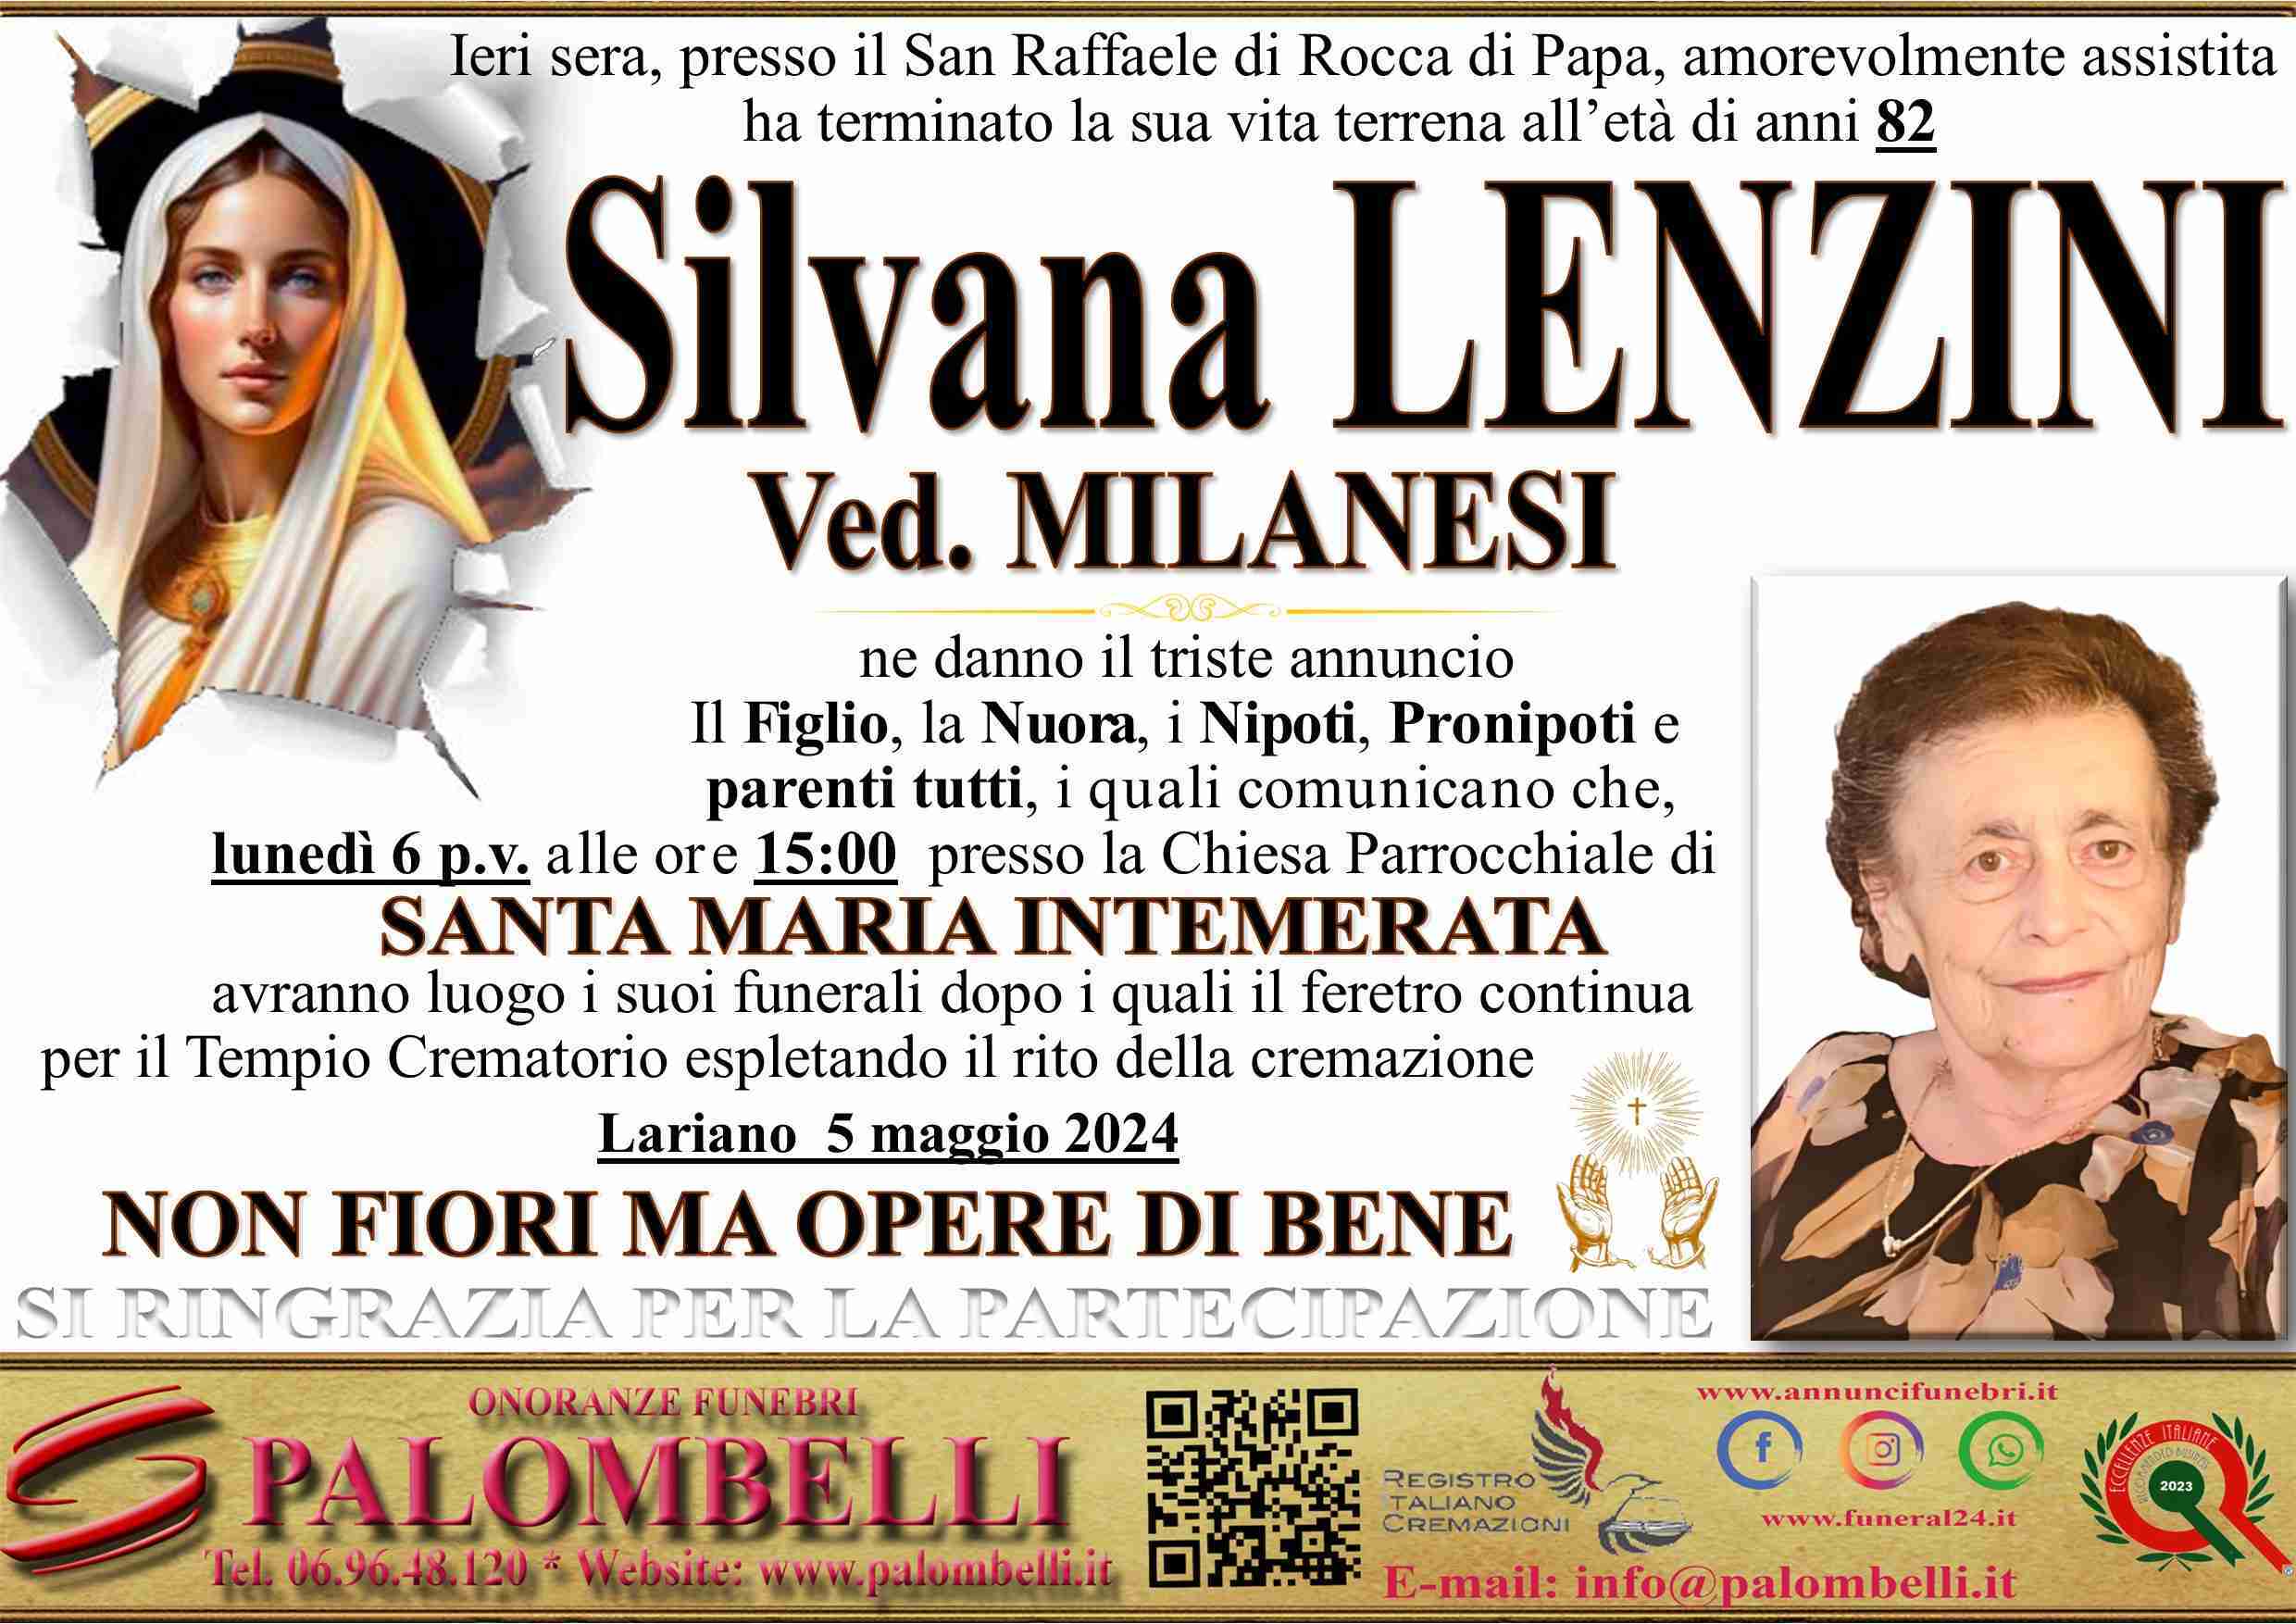 Silvana Lenzini